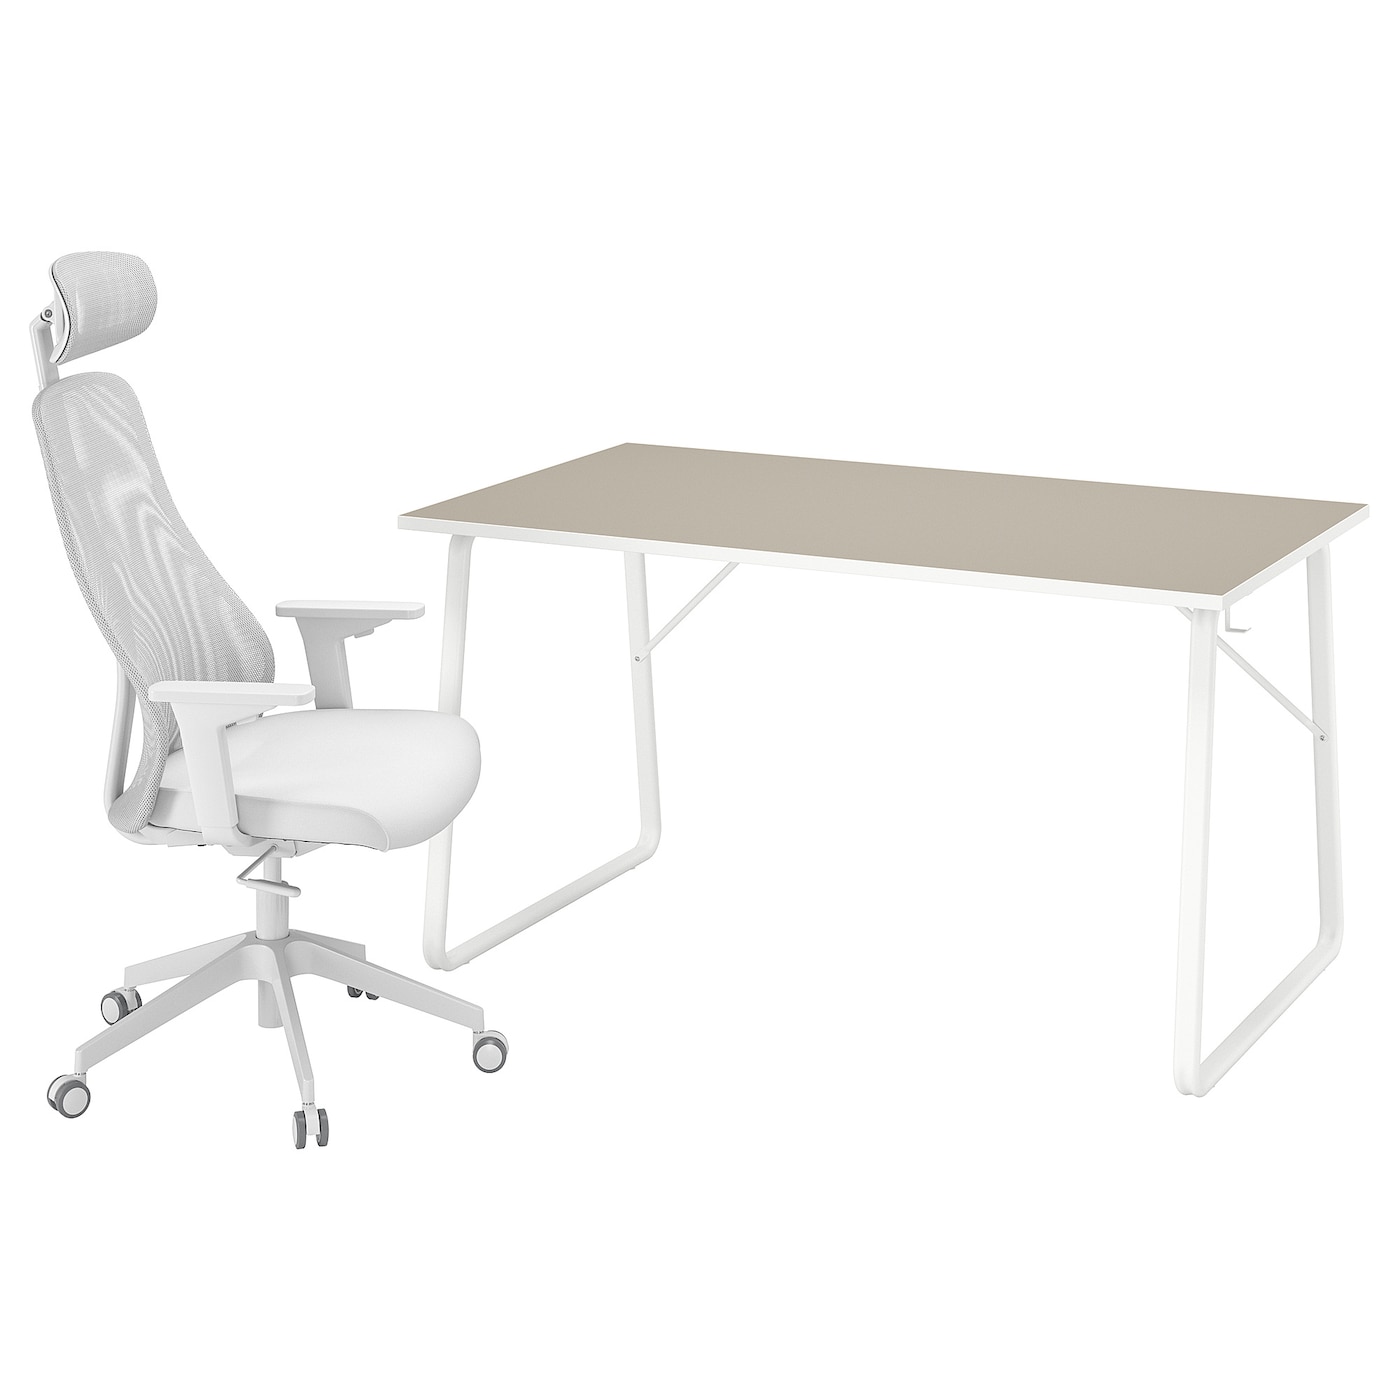 Игровой стол и стул - IKEA HUVUDSPELARE / MATCHSPEL, белый/бежевый, ХУВУДСПЕЛАРЕ/МАТЧСПЕЛ ИКЕА